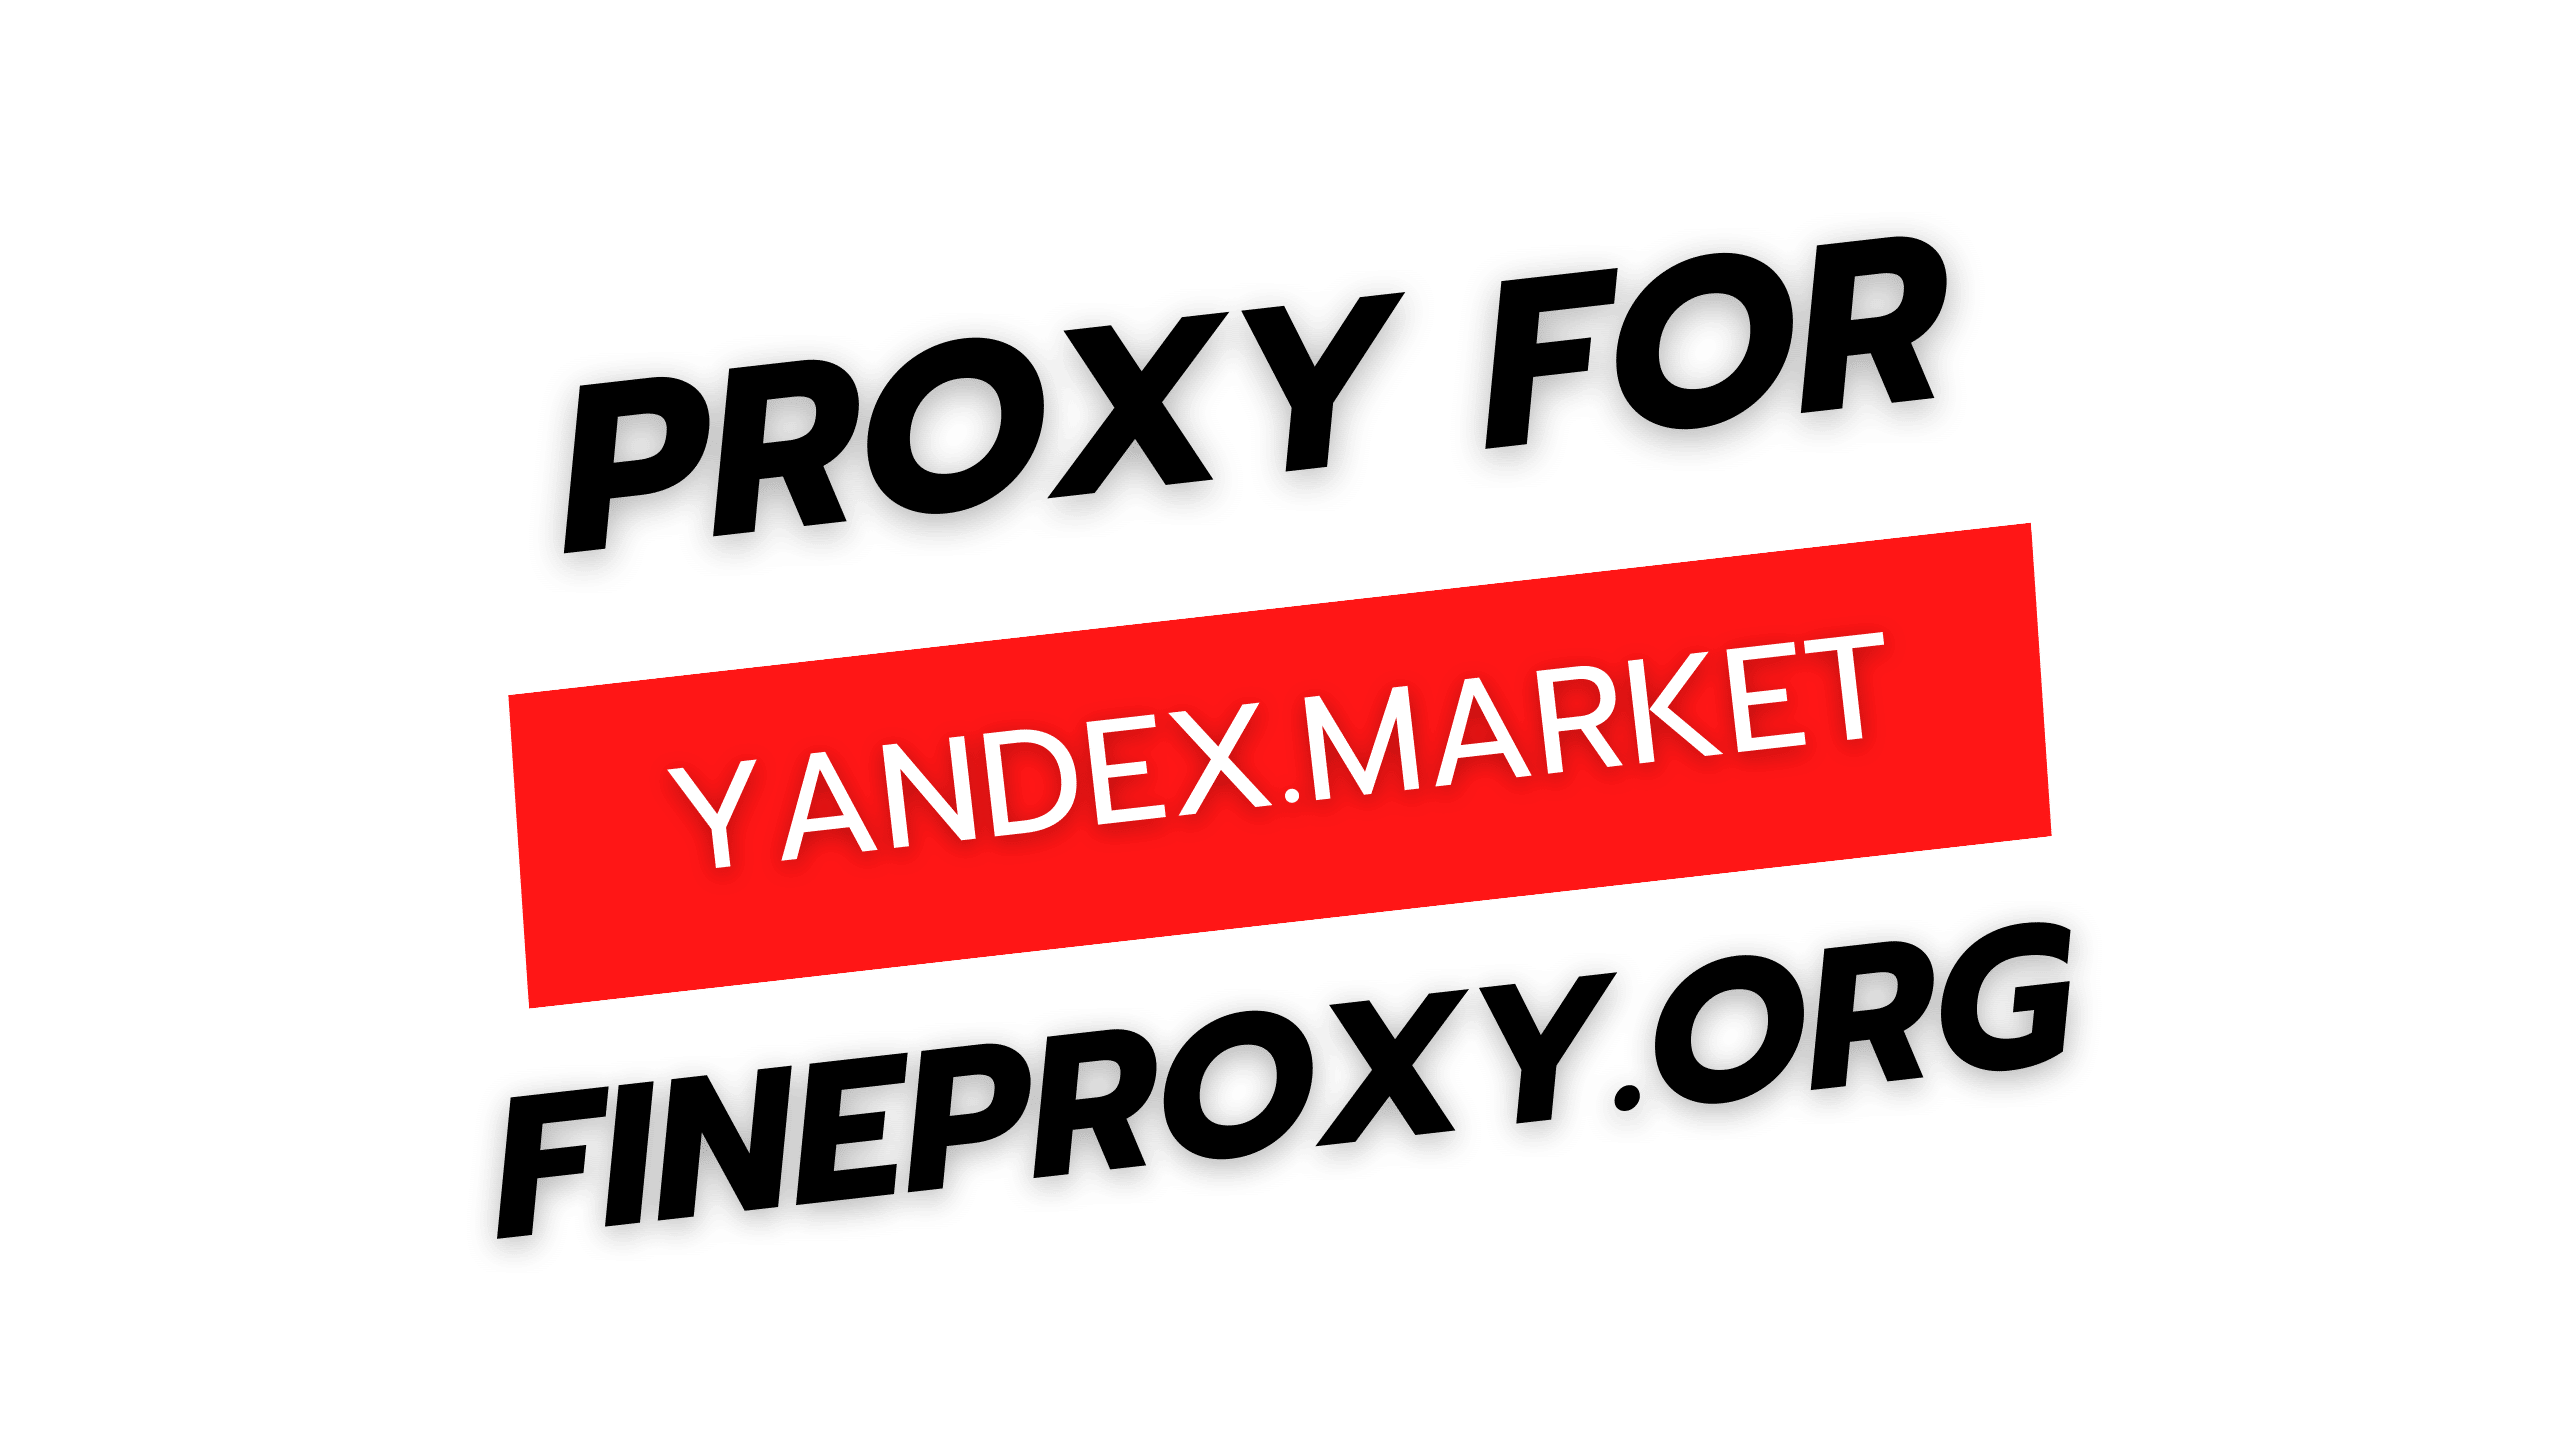 Yandex.Market